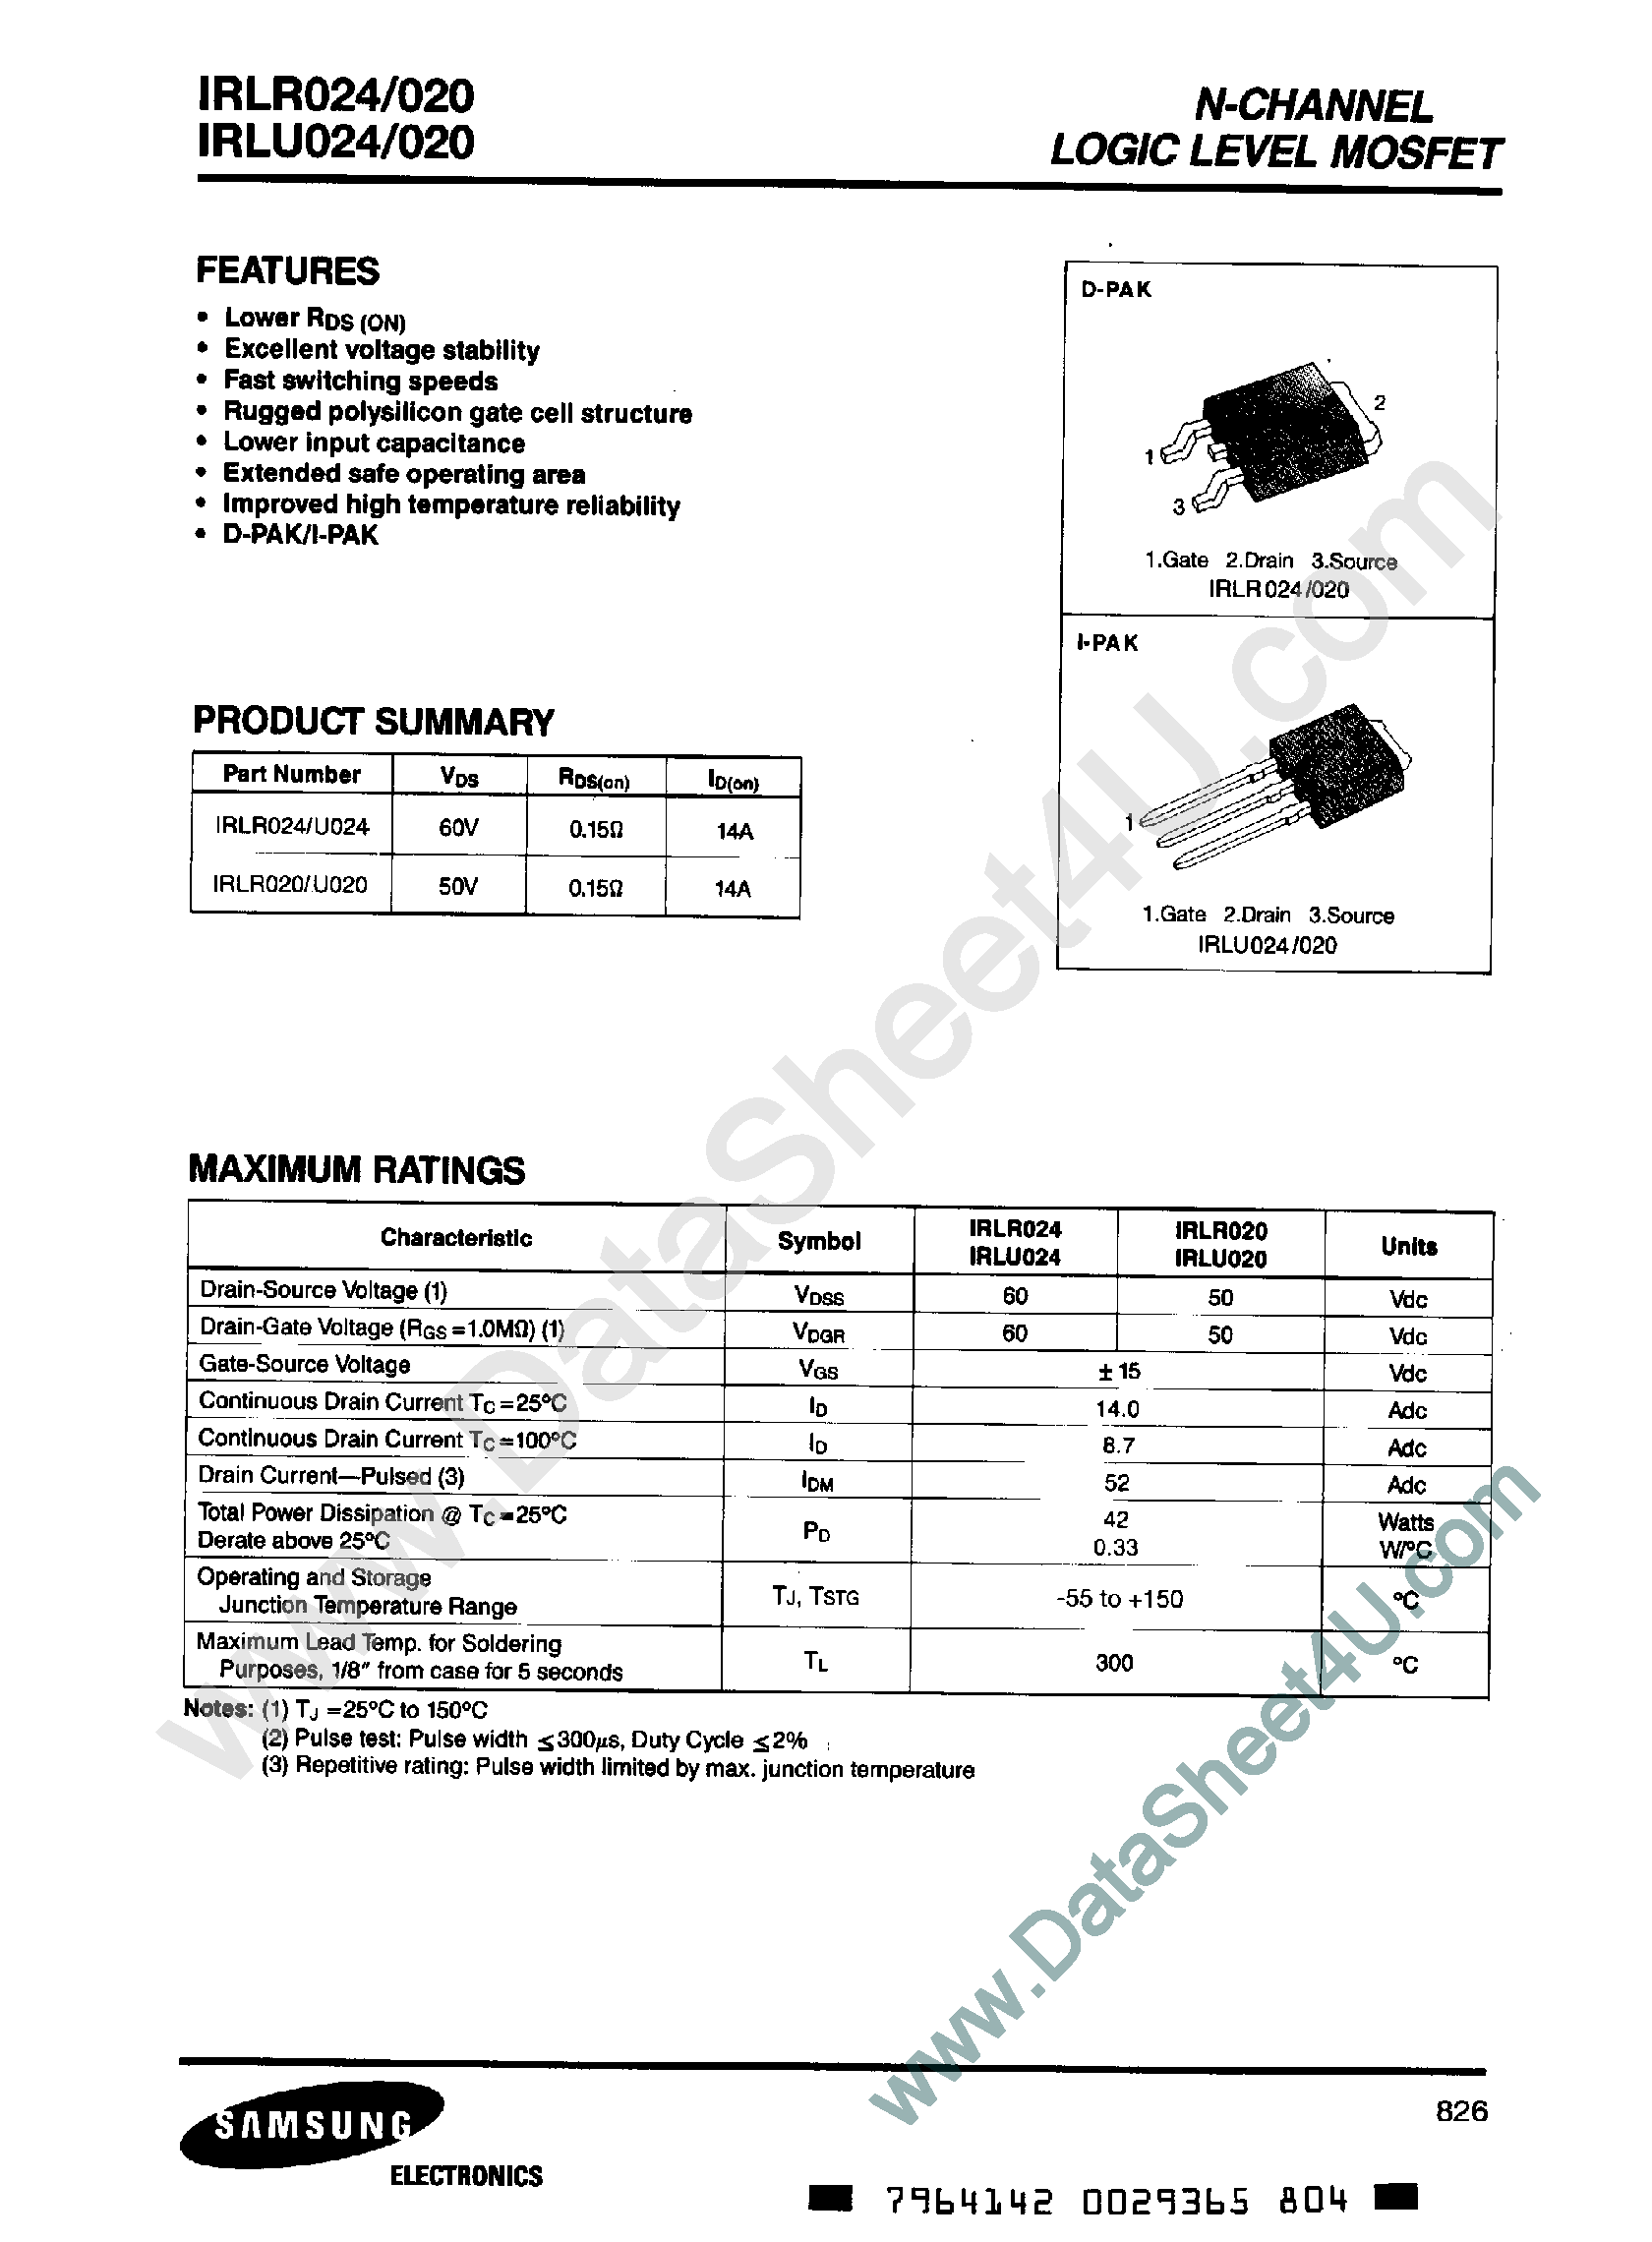 Datasheet IRLR020 - (IRLU020 / IRLU024) N-Channel Logic Level MOSFET page 1